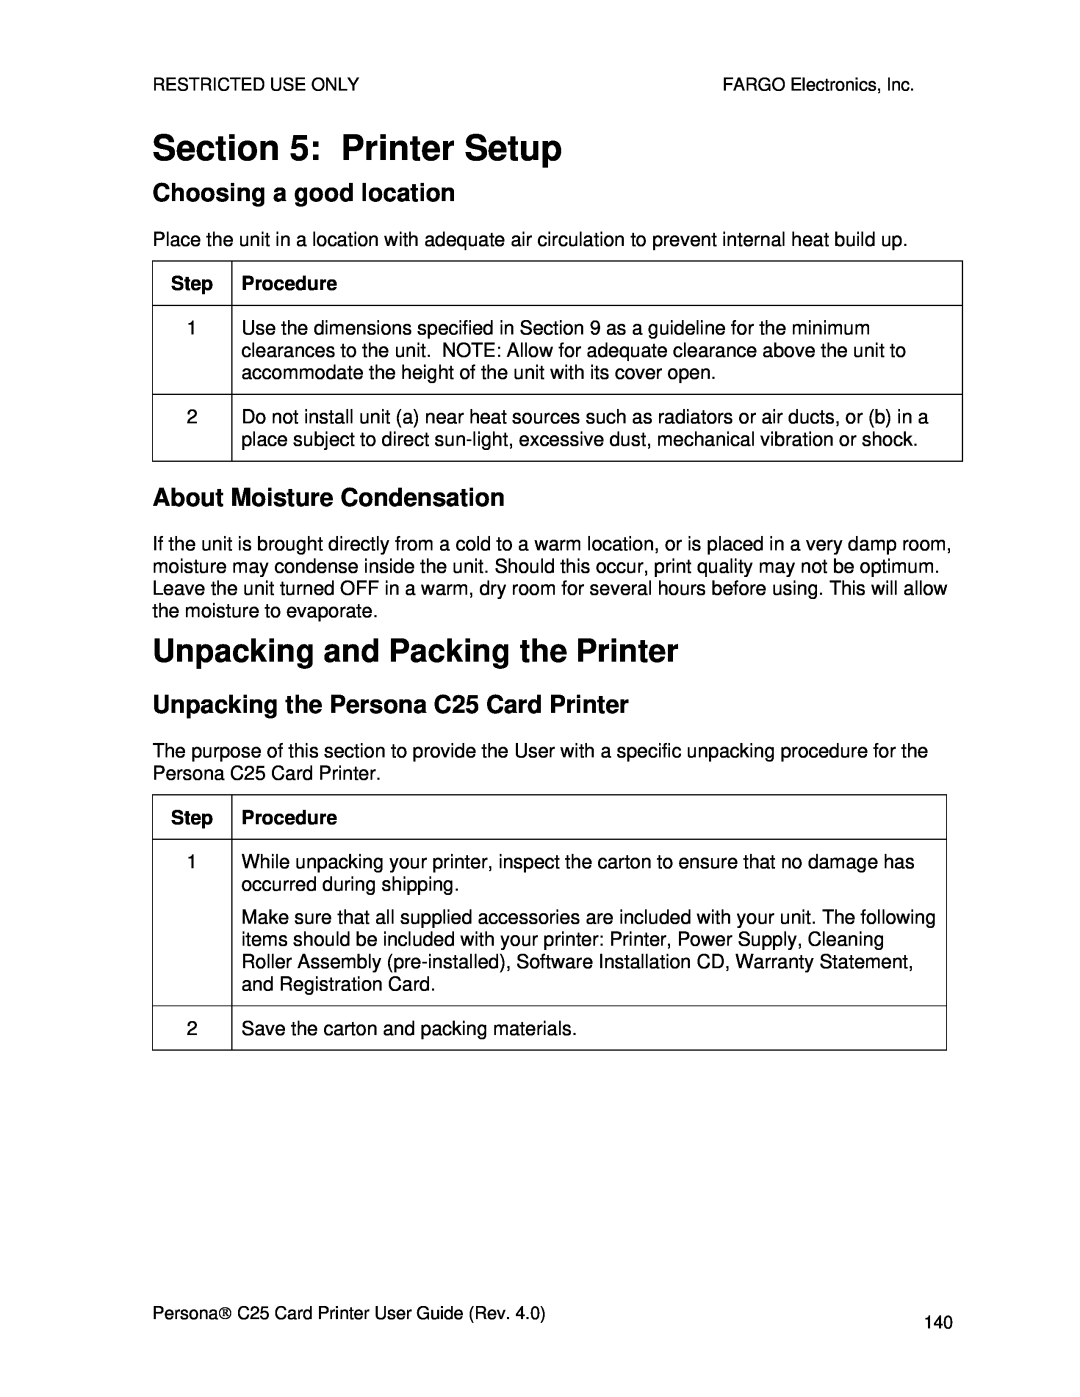 FARGO electronic S000256 manual Printer Setup, Unpacking and Packing the Printer, Choosing a good location 